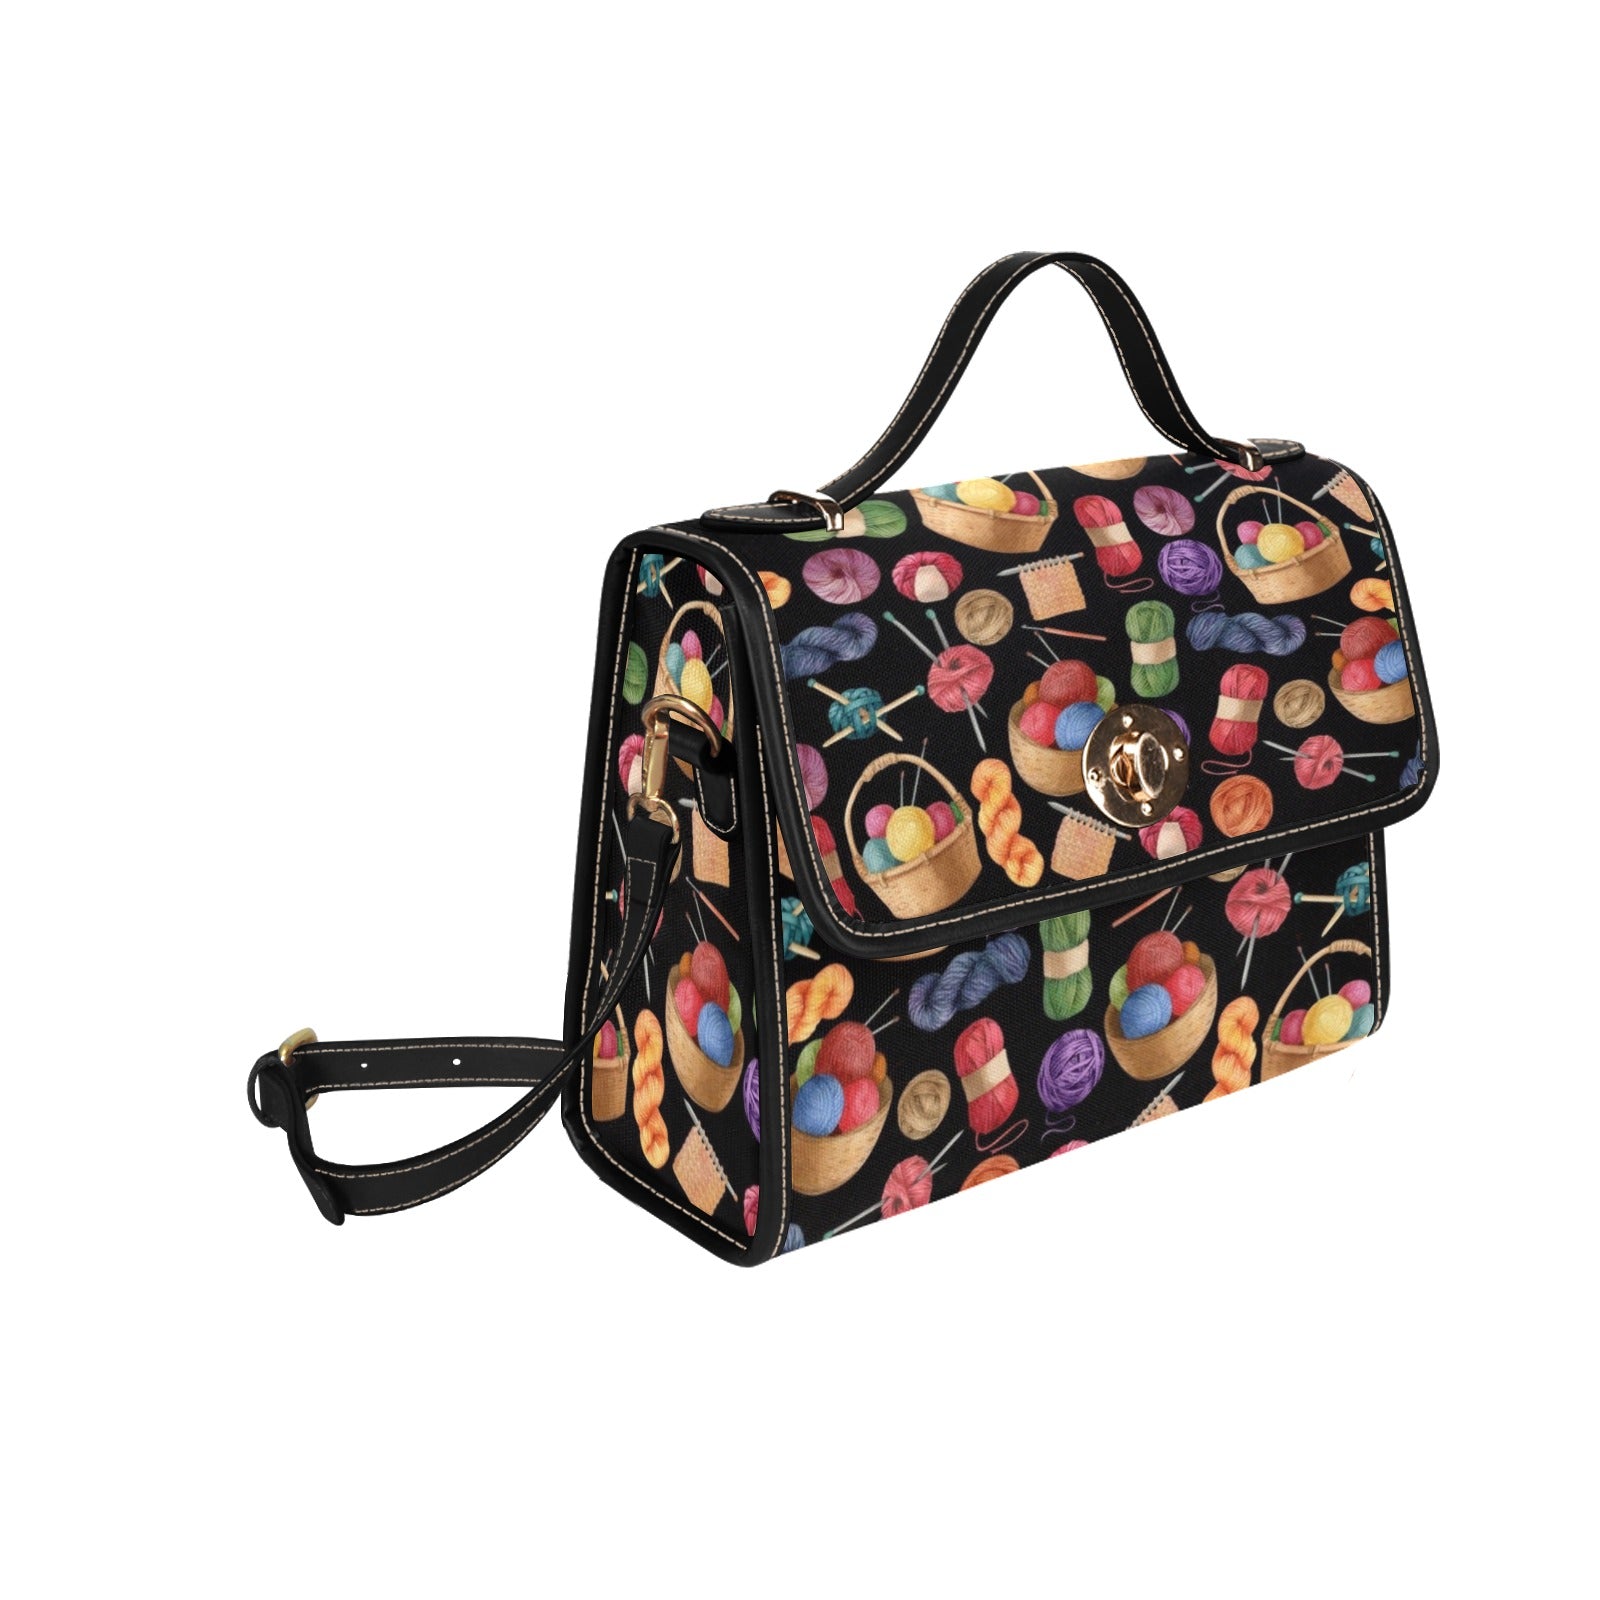 Yarn - Waterproof Canvas Handbag